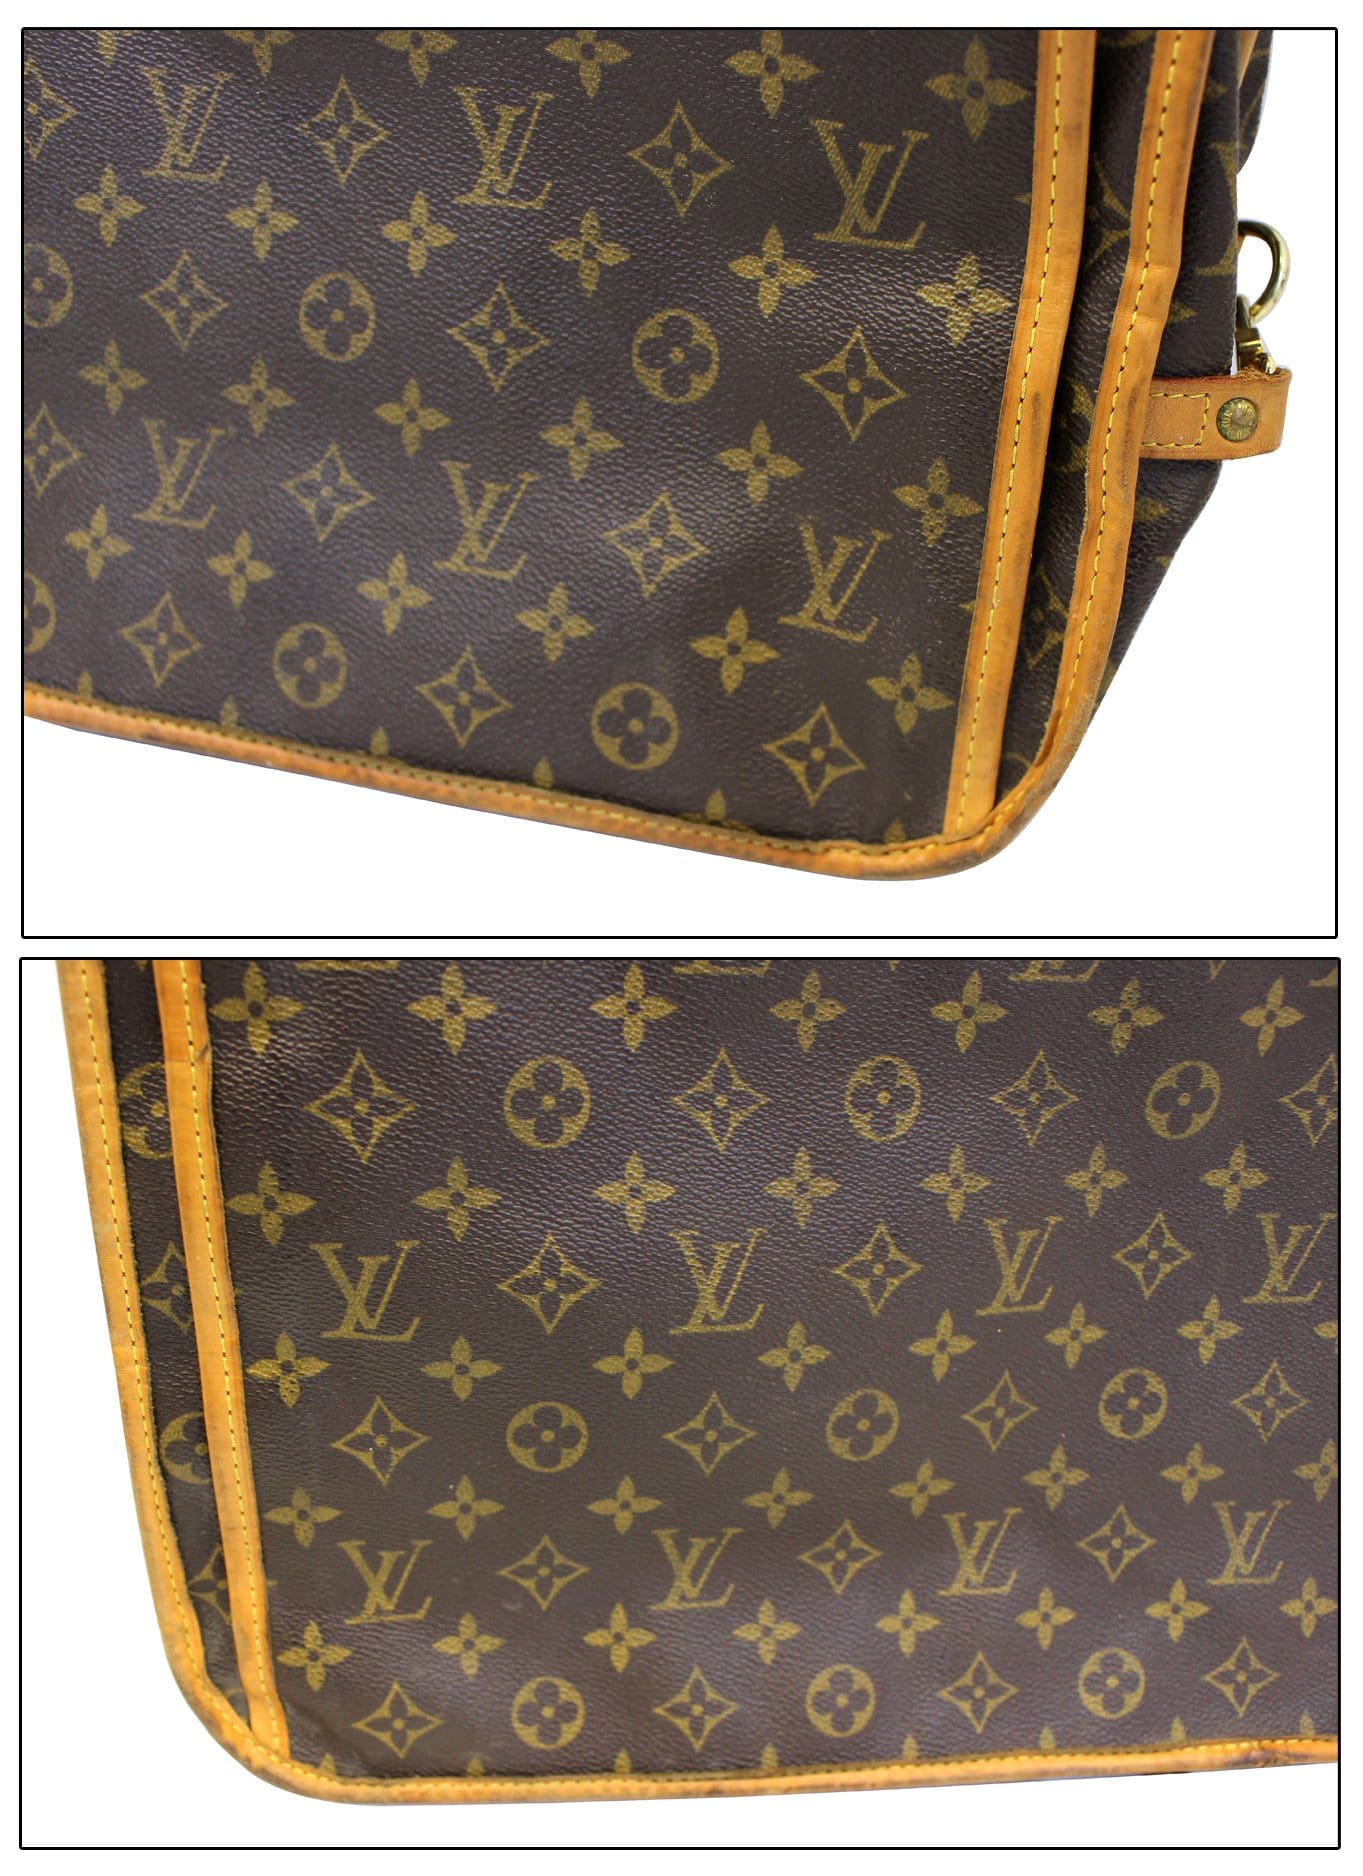 Vintage Louis Vuitton Monogram Travel Garment Bag